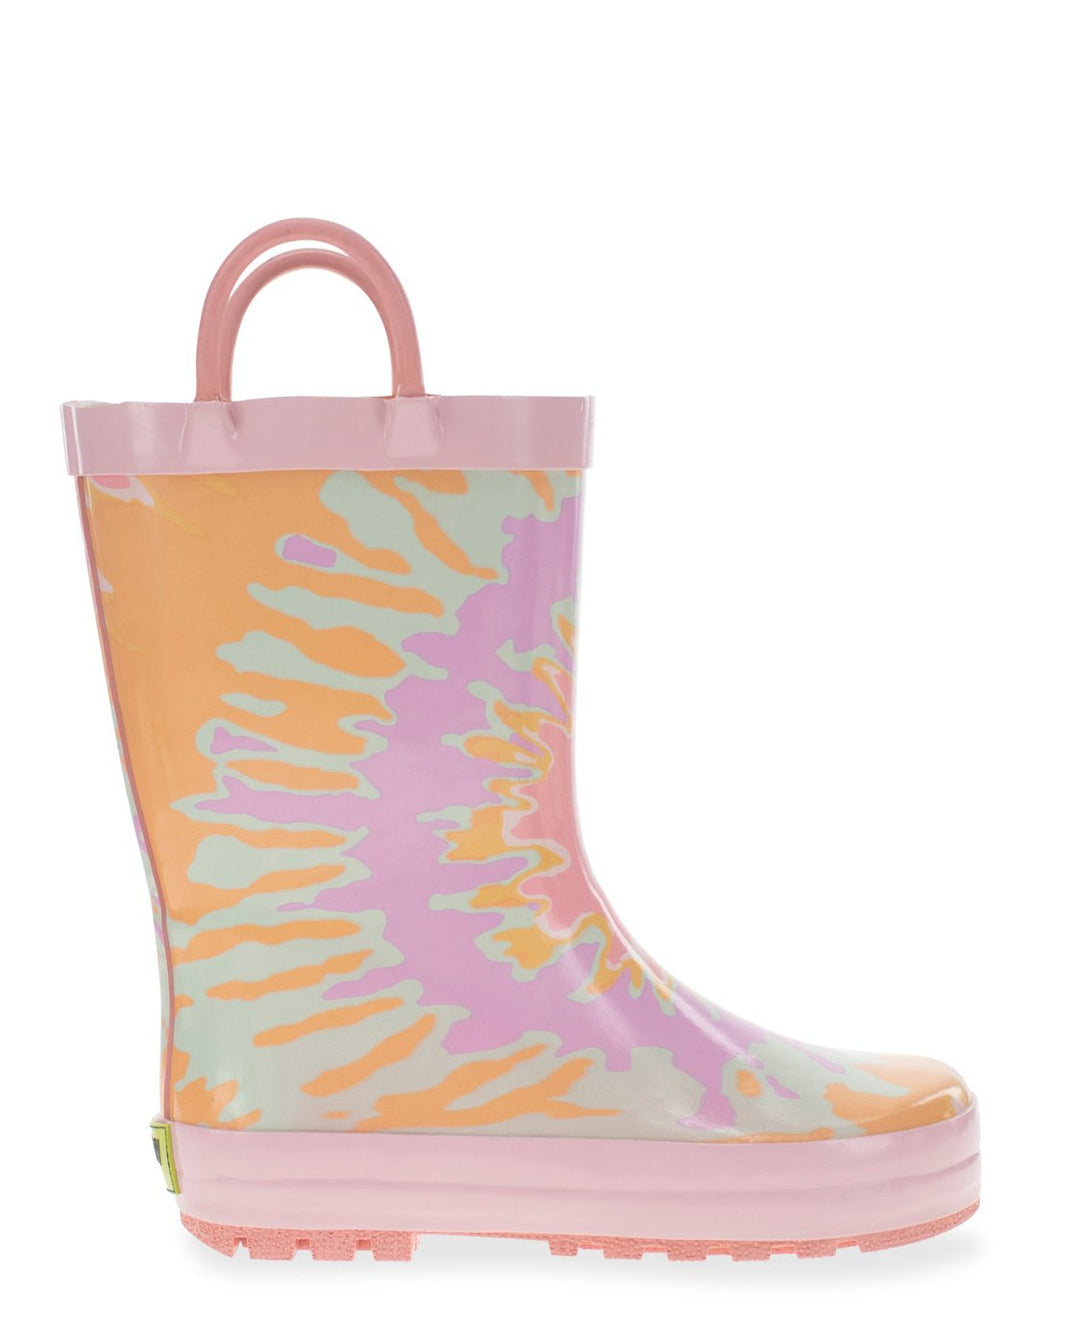 Kids Tie Dye Dream Rain Boot - Pink - Western Chief